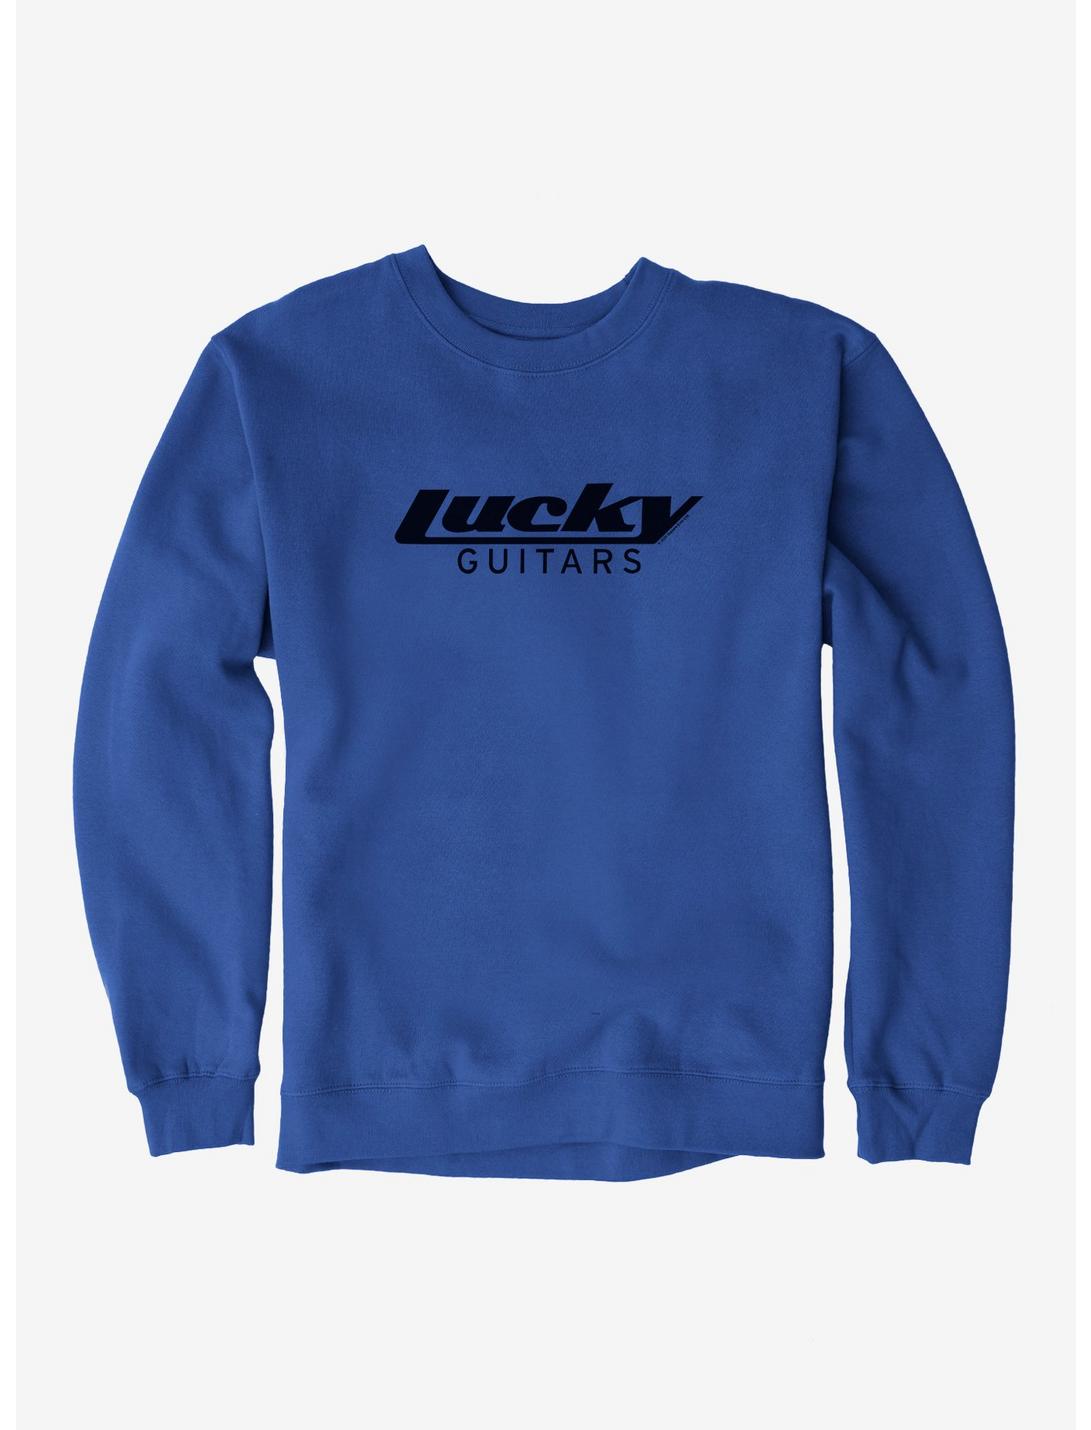 Square Enix Lucky Guitars Sweatshirt, ROYAL BLUE, hi-res